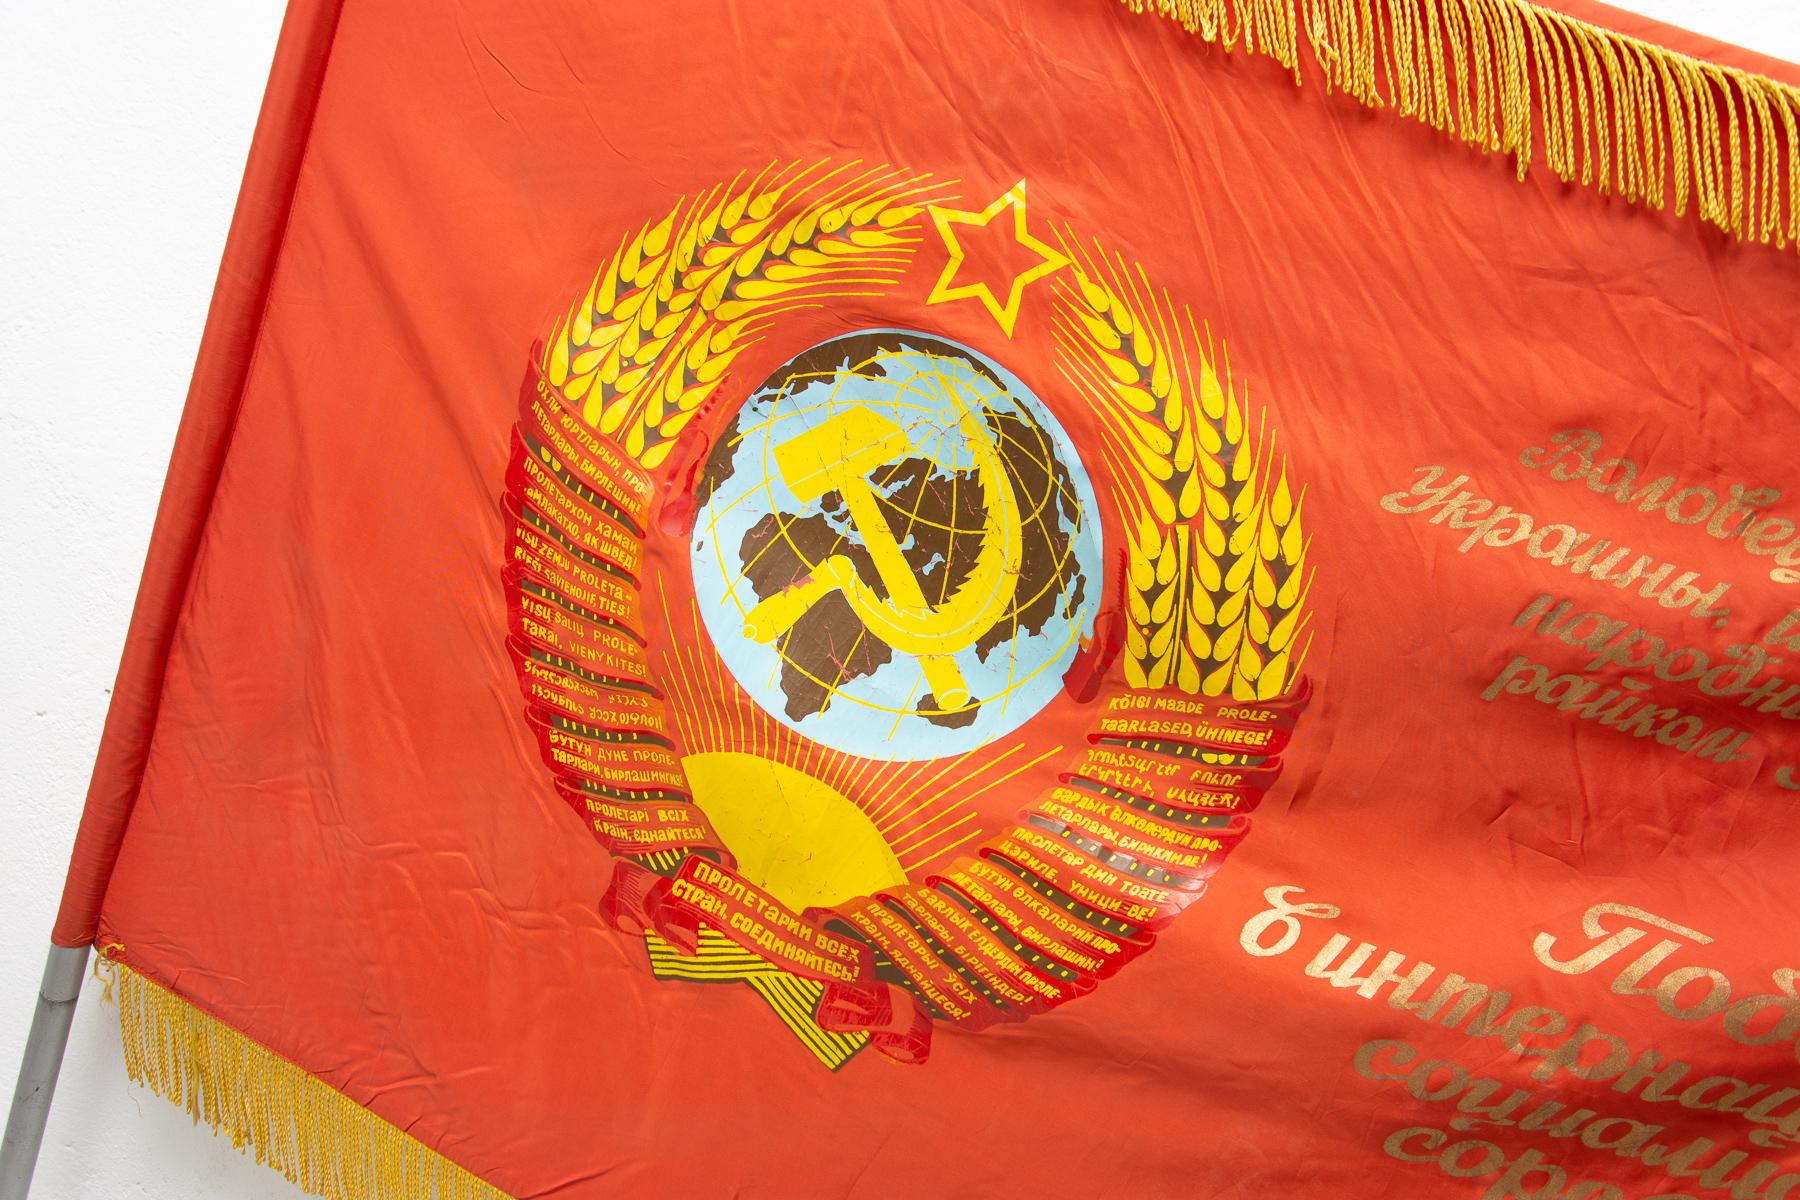 Communist Old Original Flag from 1950s with a Portrait of Vladimir Ilyich Lenin 1